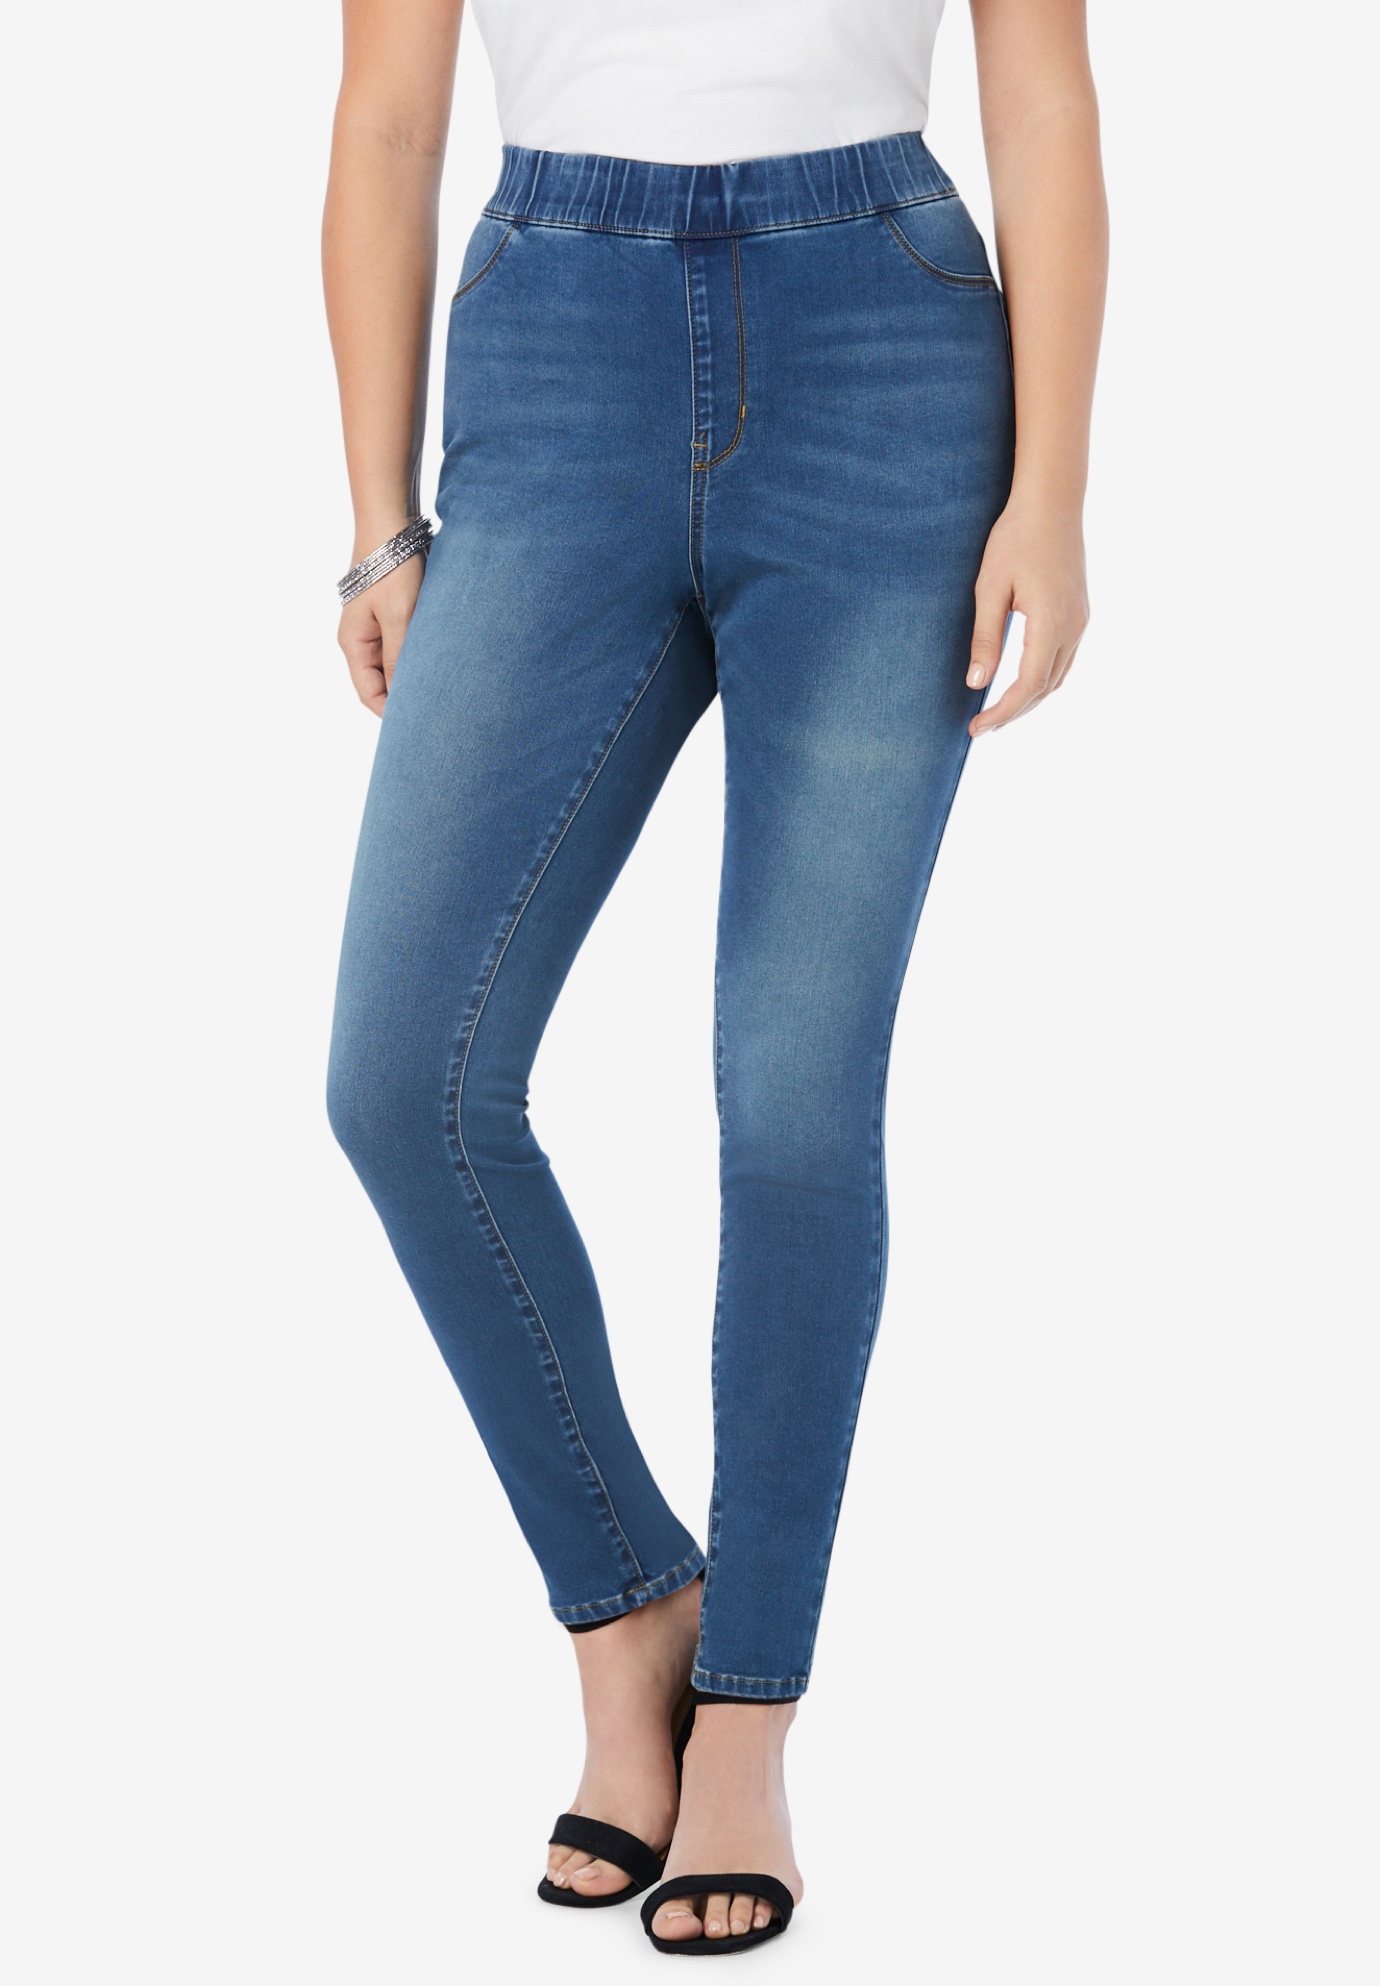 The Straight-Leg No-Gap Jean, 